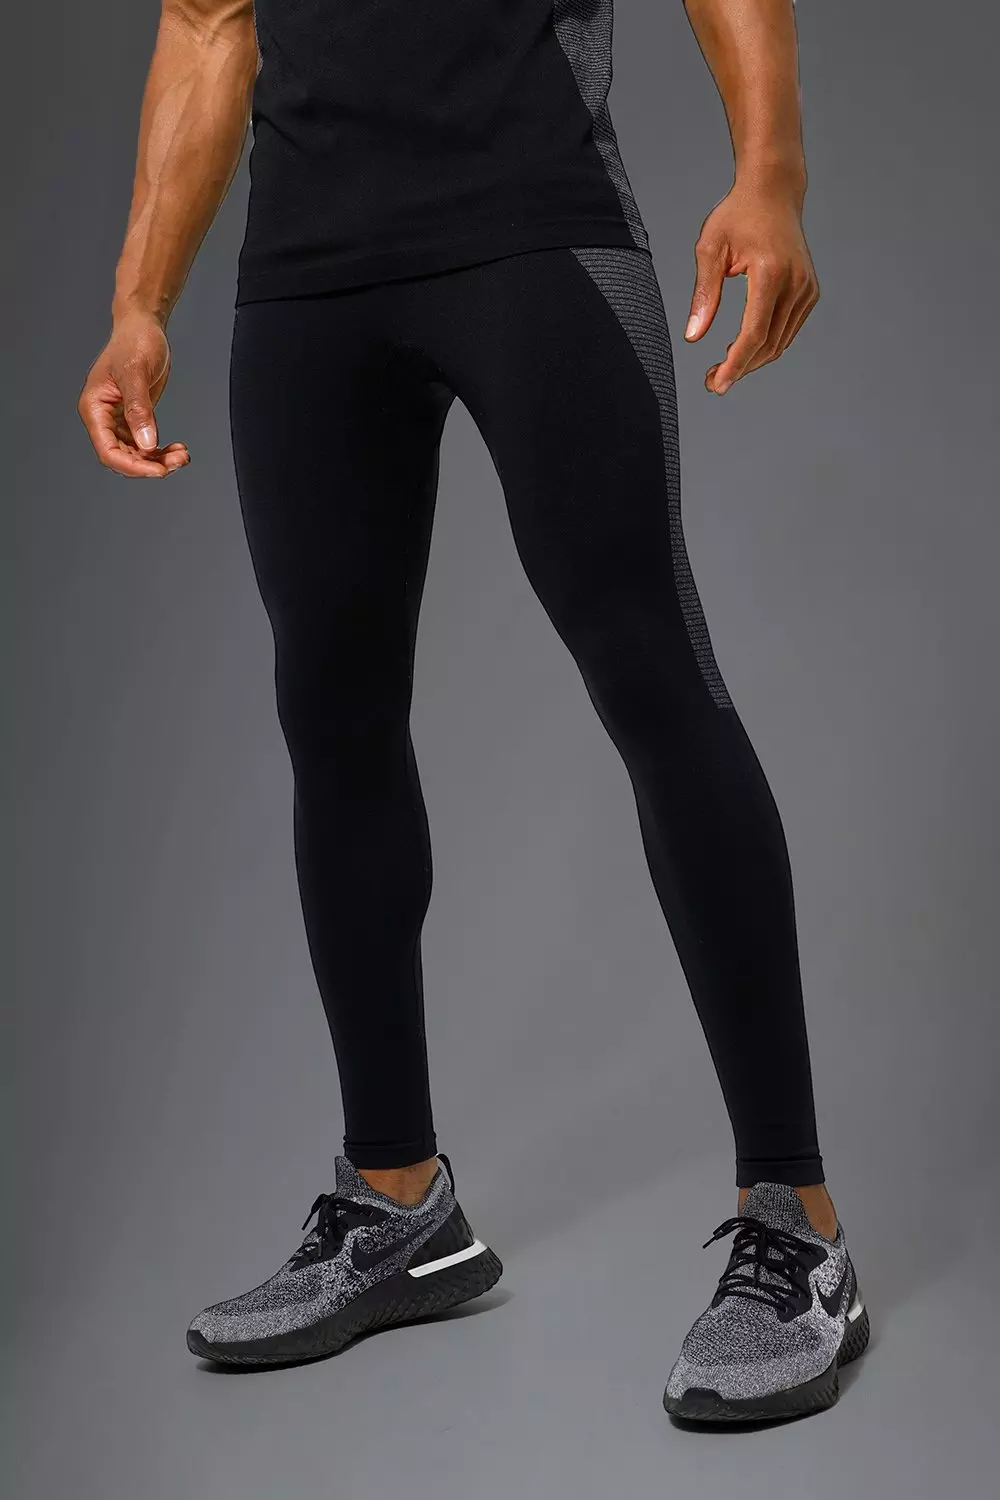 Buy Active Black Seamless Leggings M, Sports leggings